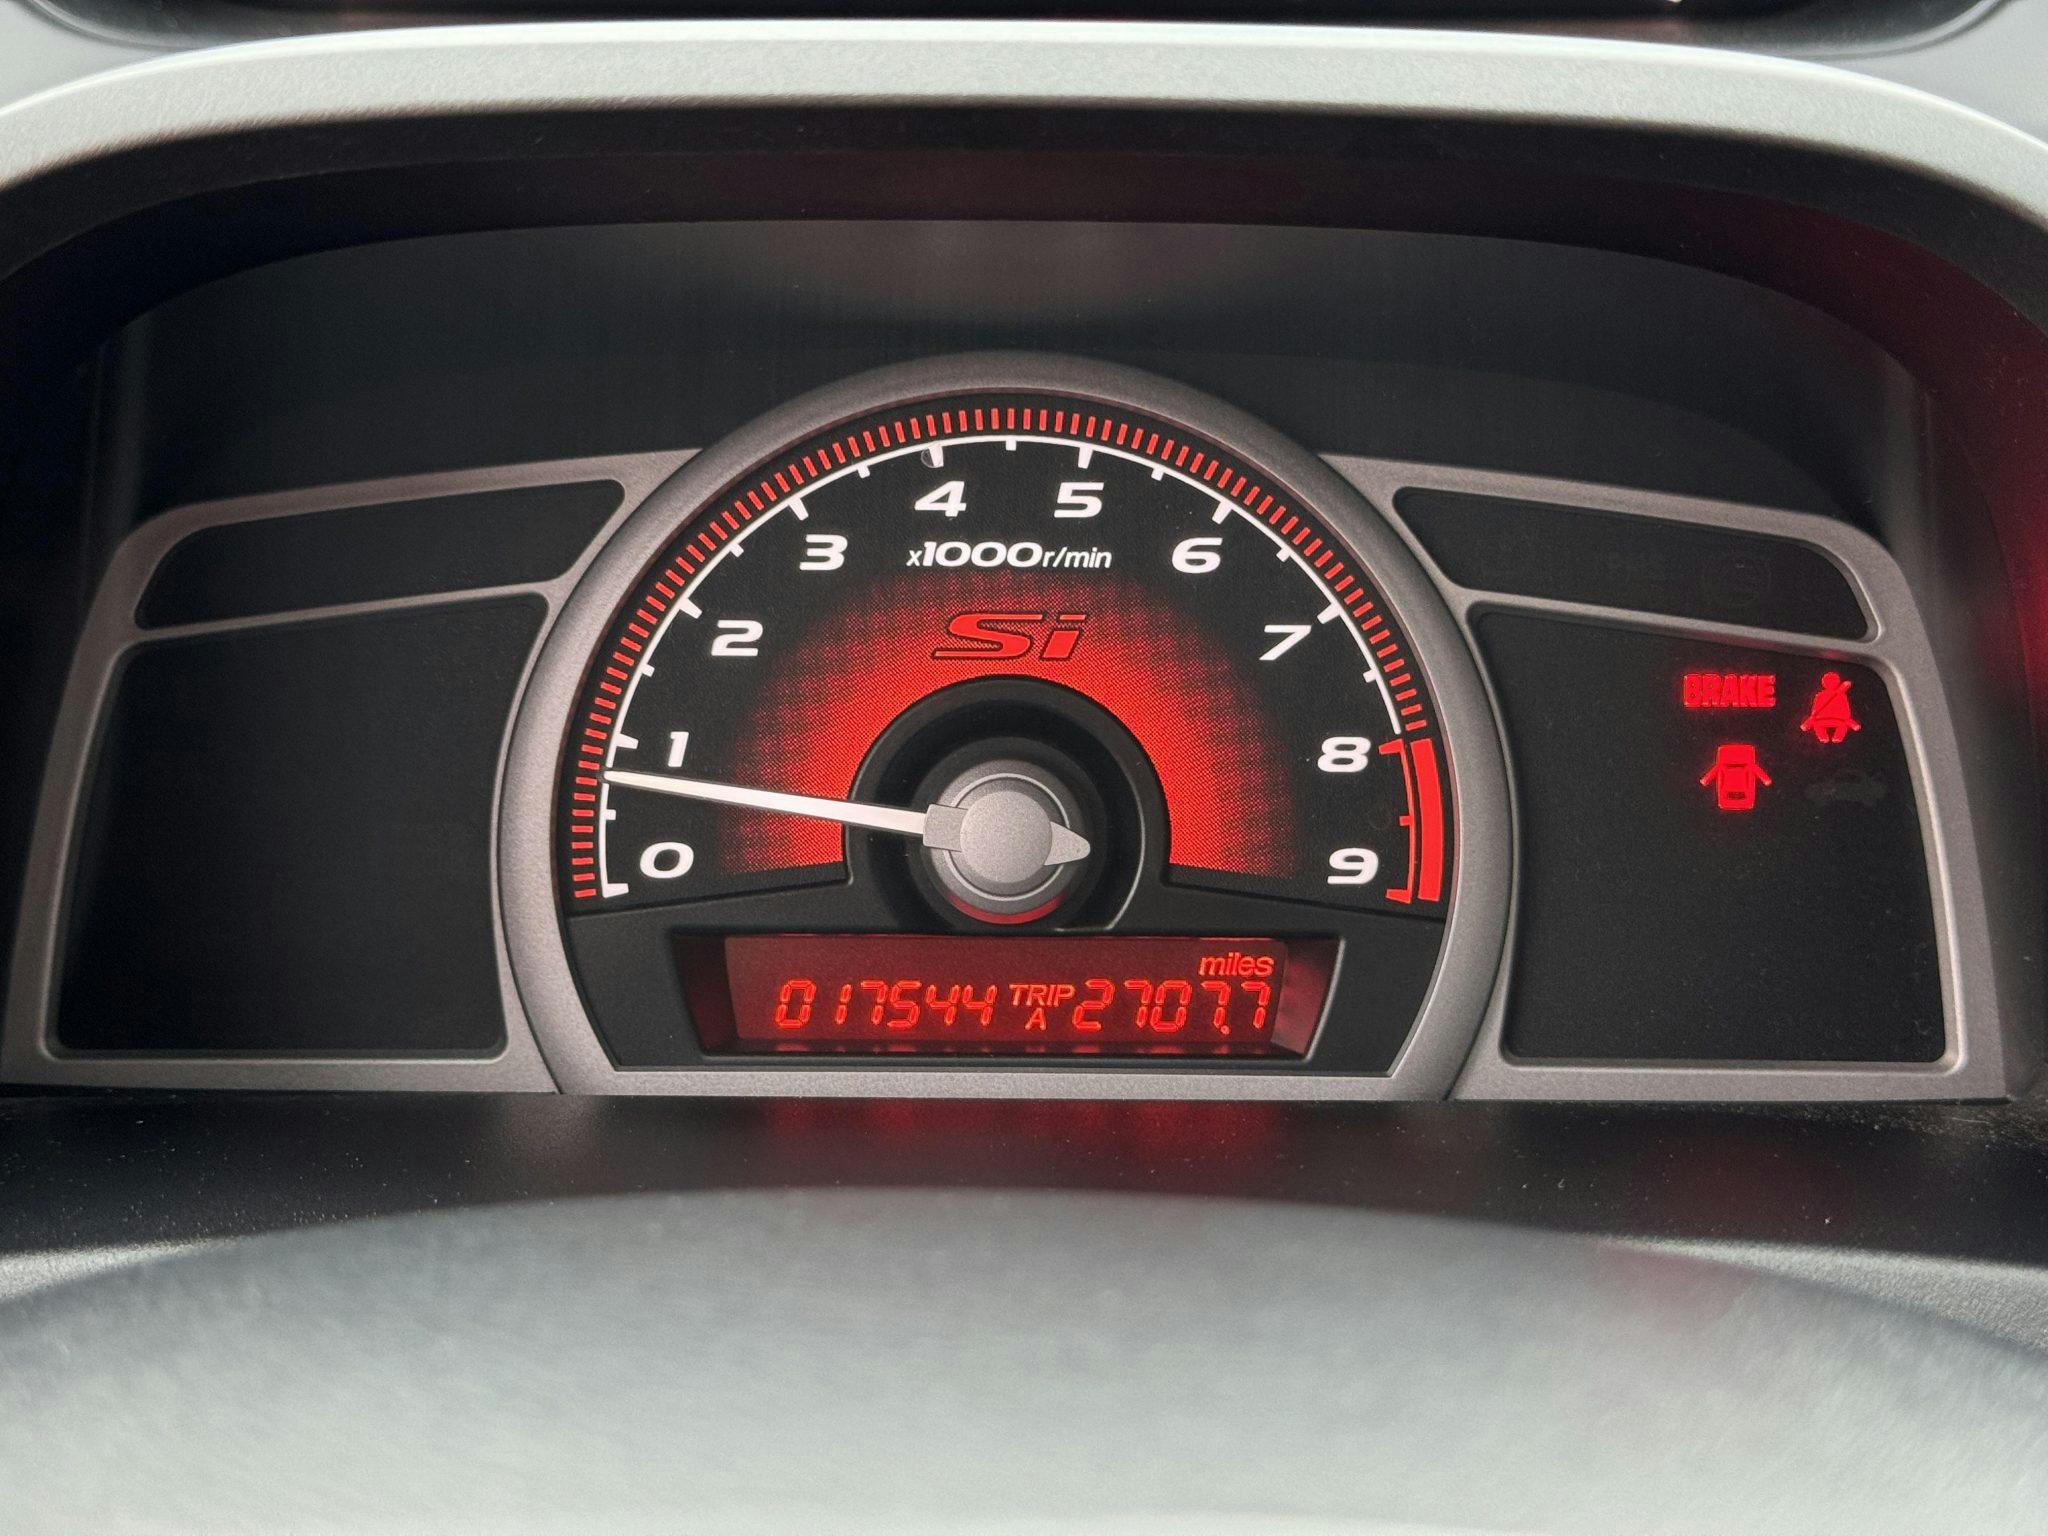 2008 Honda Civic Mugen Si dash gauges